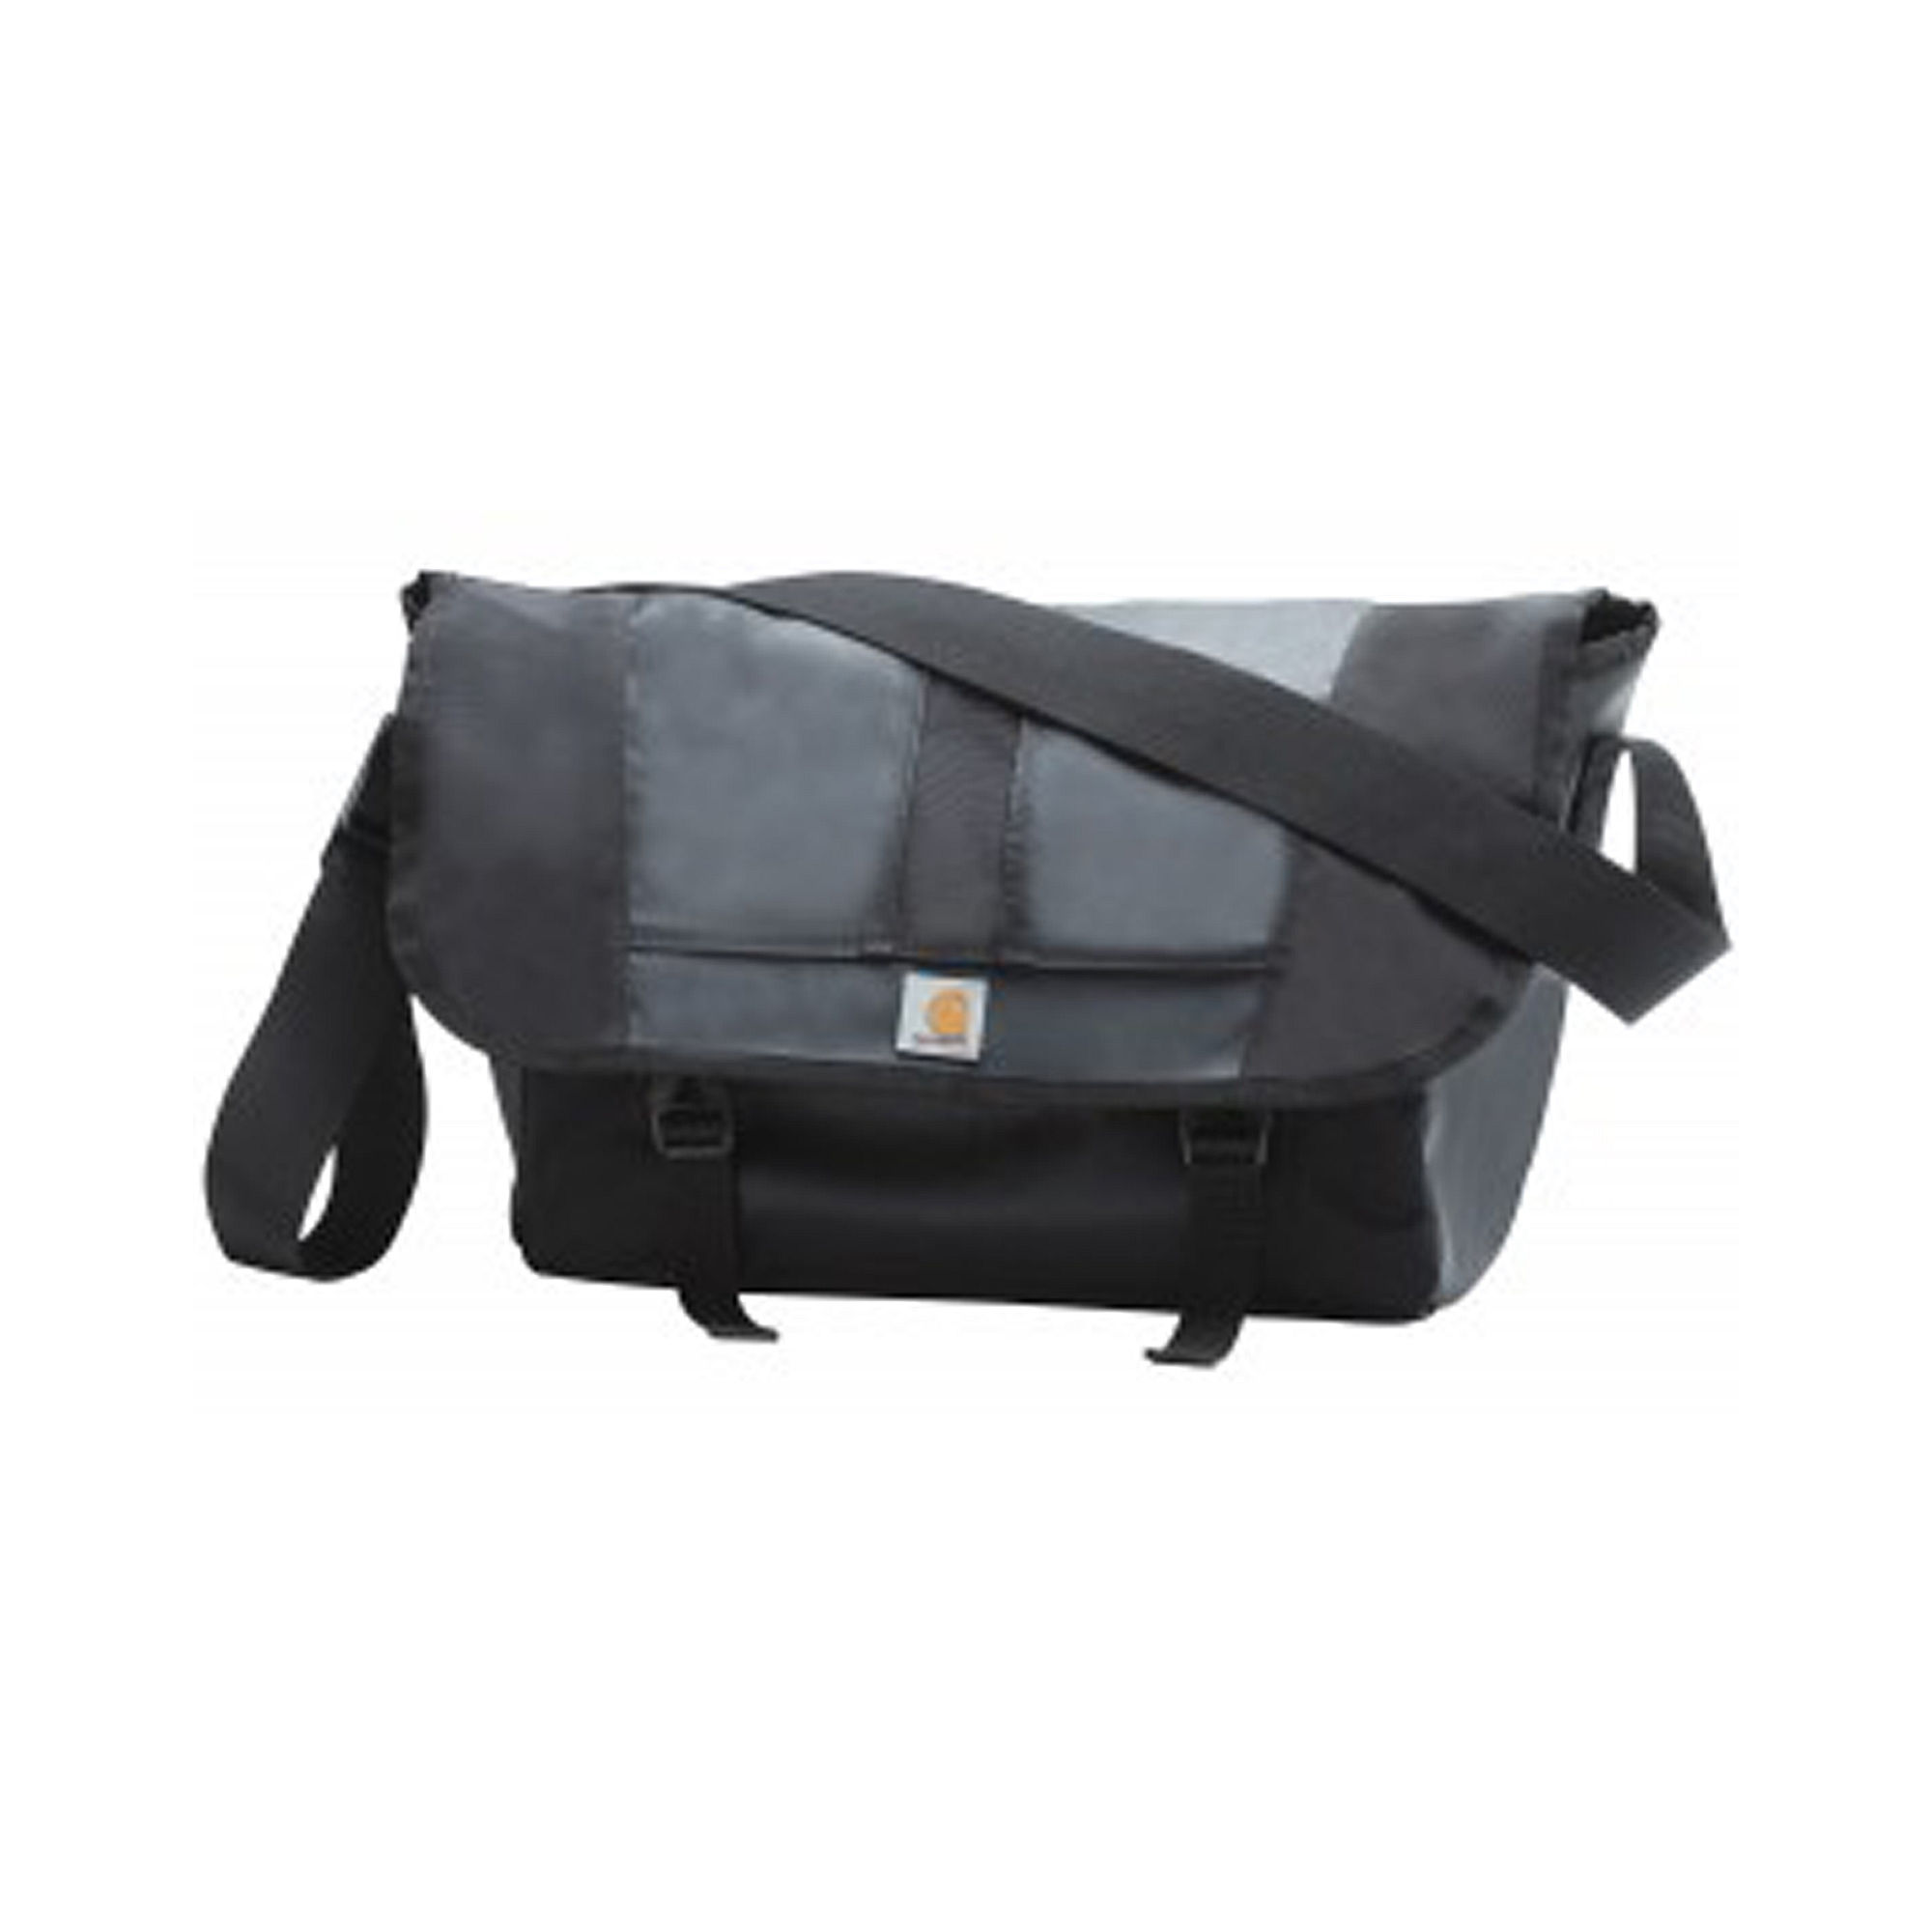 Carhartt Ripstop Messenger Bag in Black - 819062011073